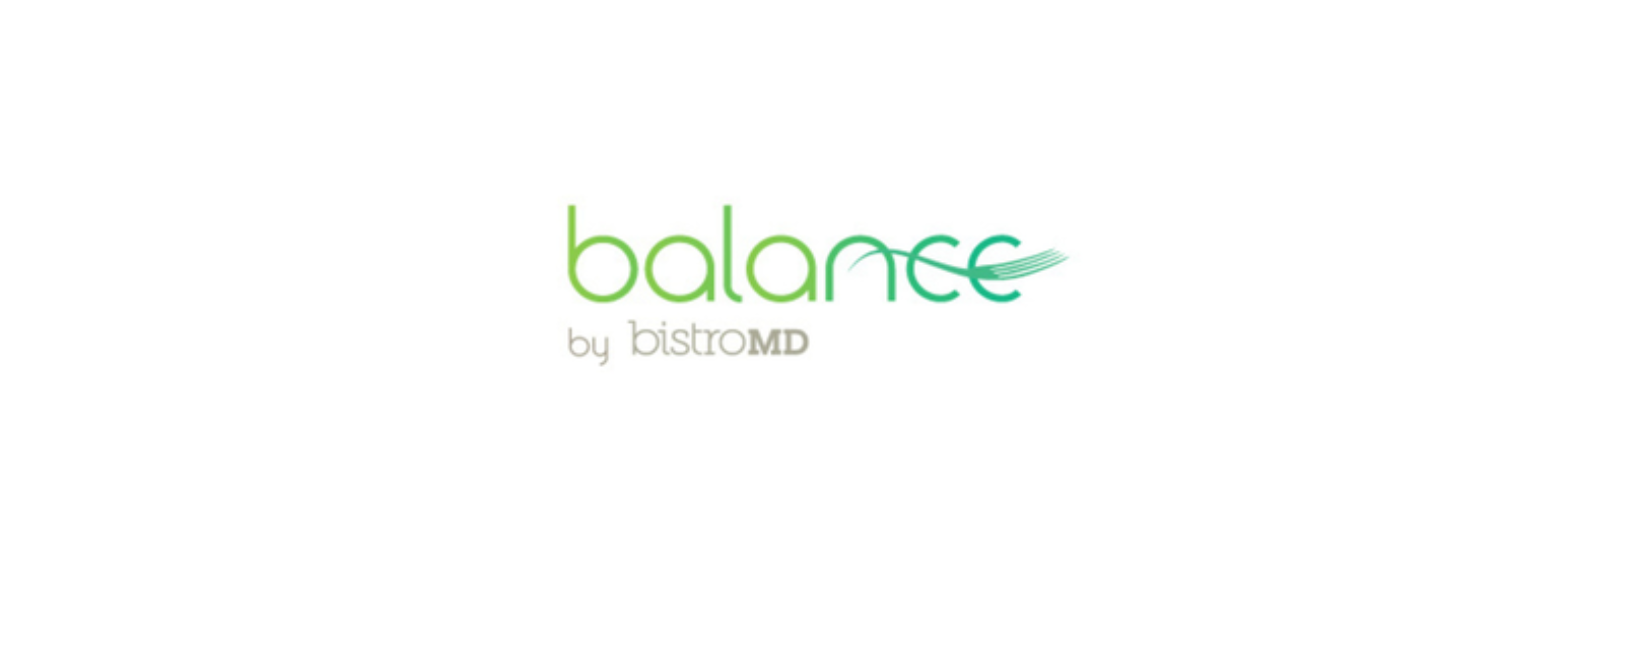 Balance by bistroMD Discount Code 2022